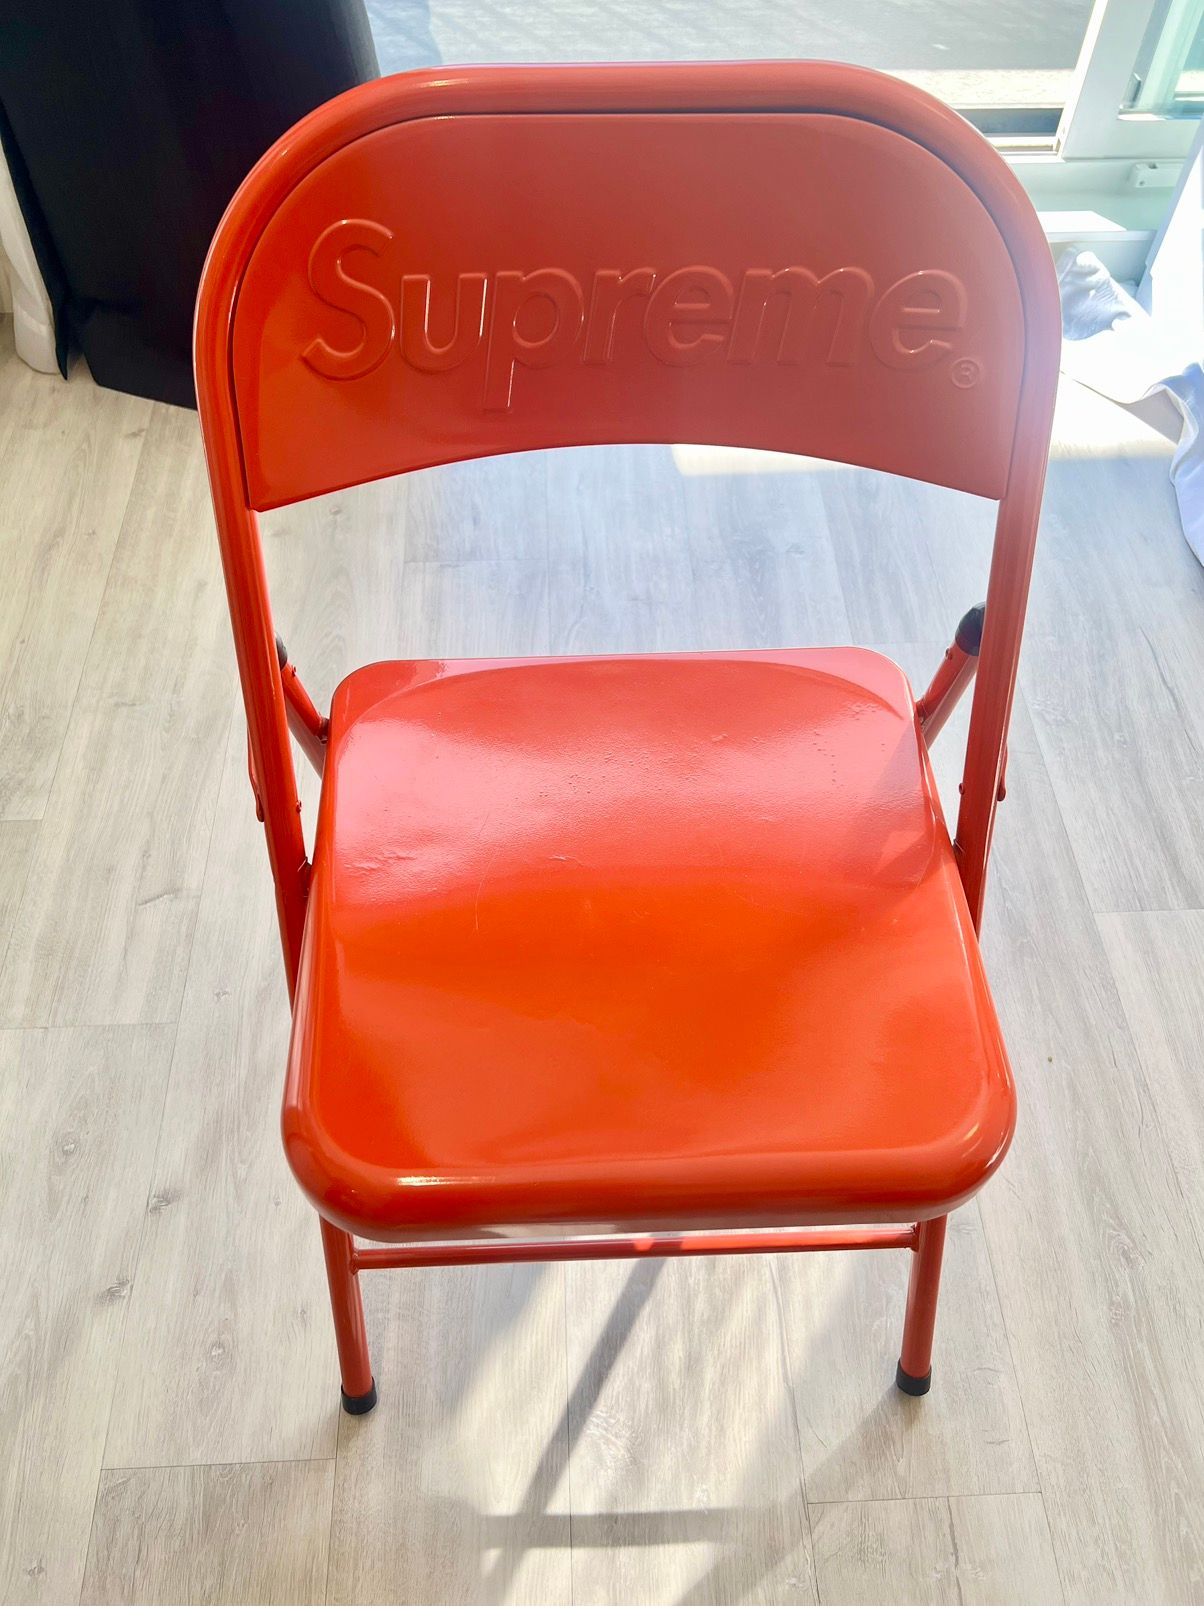 Supreme Red Supreme Folding Chair | Grailed